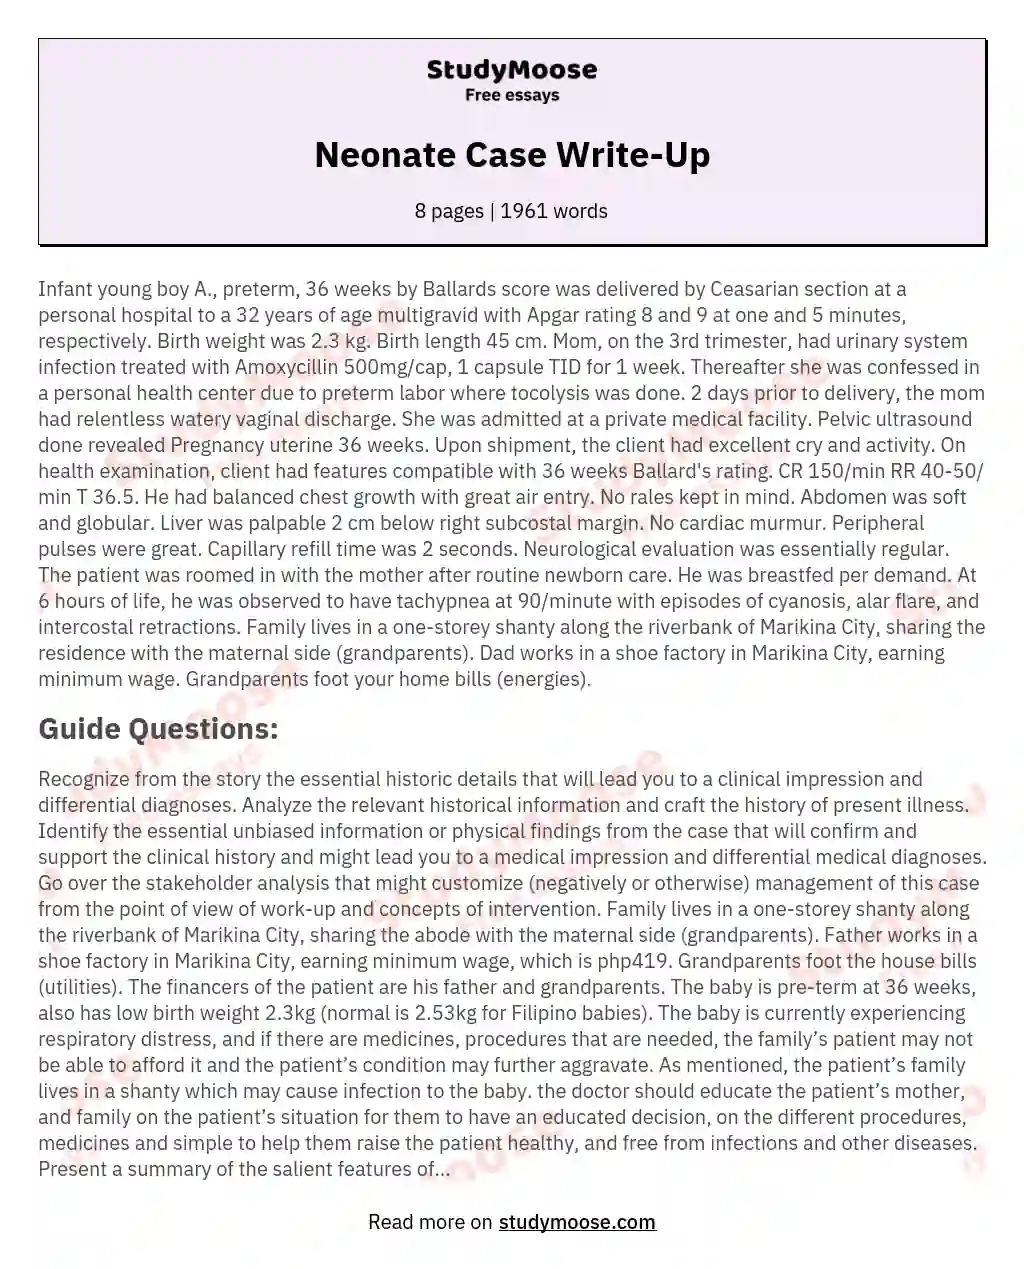 Neonate Case Write-Up essay